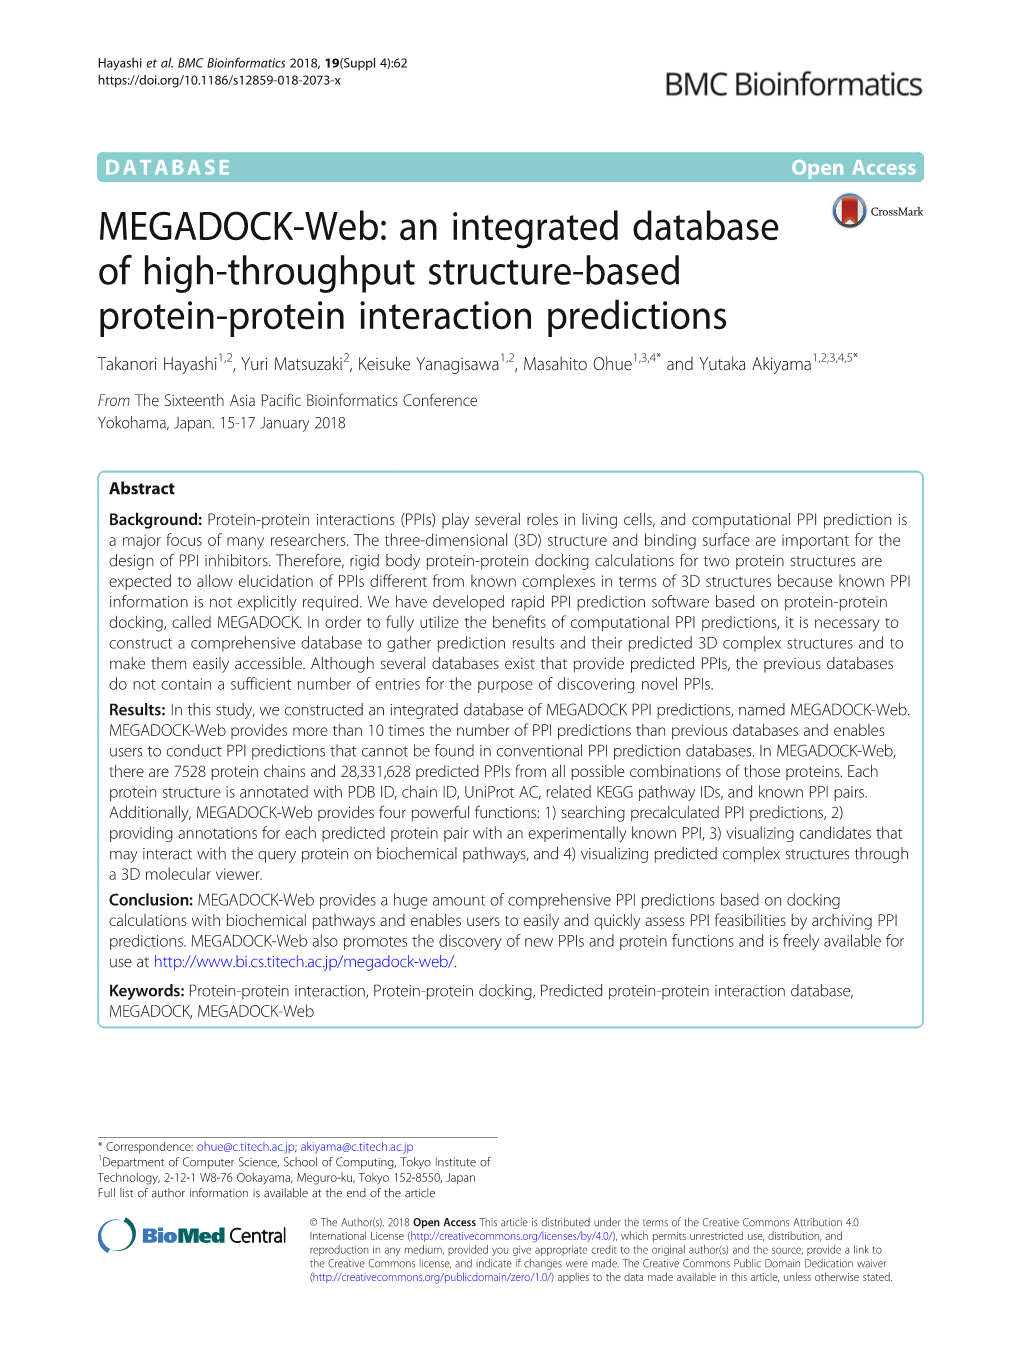 MEGADOCK-Web: an Integrated Database of High-Throughput